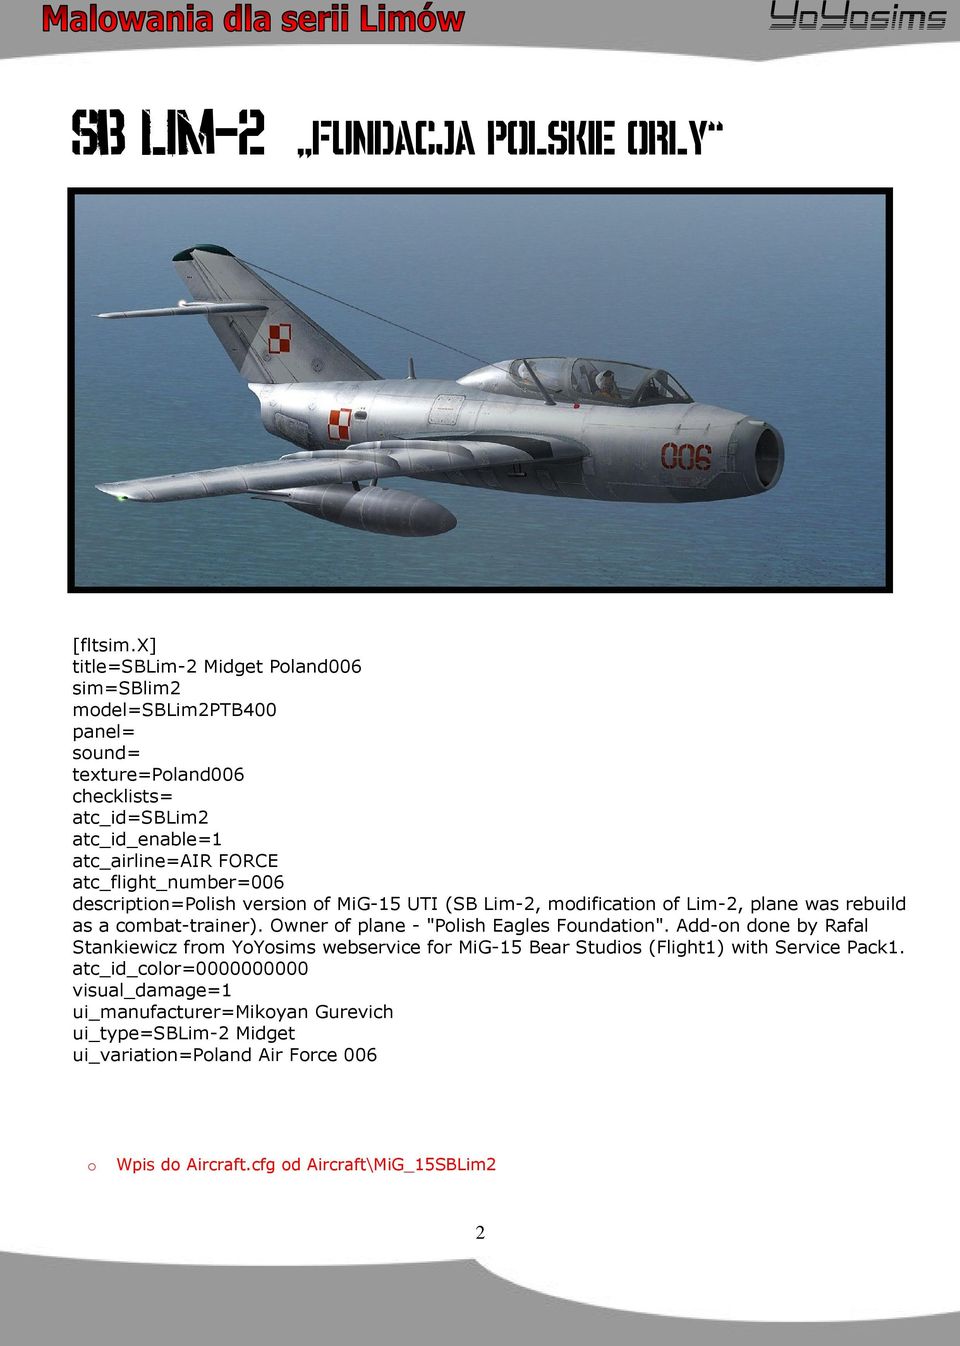 atc_flight_number=006 description=polish version of MiG-15 UTI (SB Lim-2, modification of Lim-2, plane was rebuild as a combat-trainer).